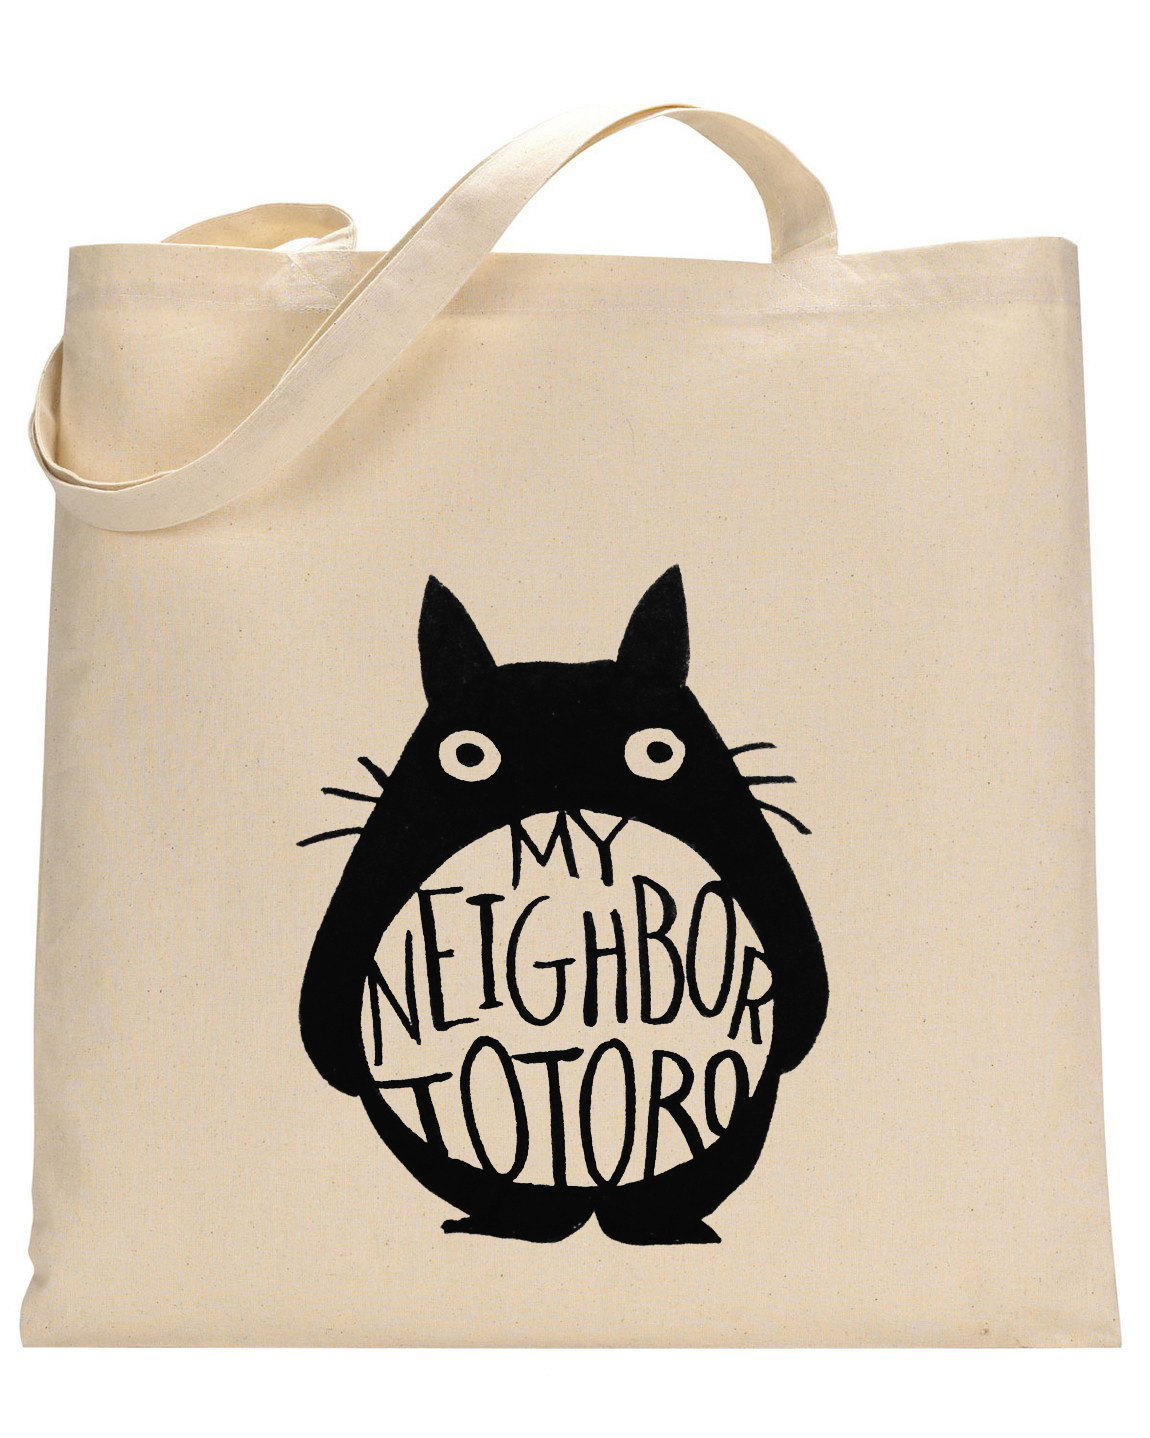 My Neighbor Totoro tote bag by BforBertha on Etsy